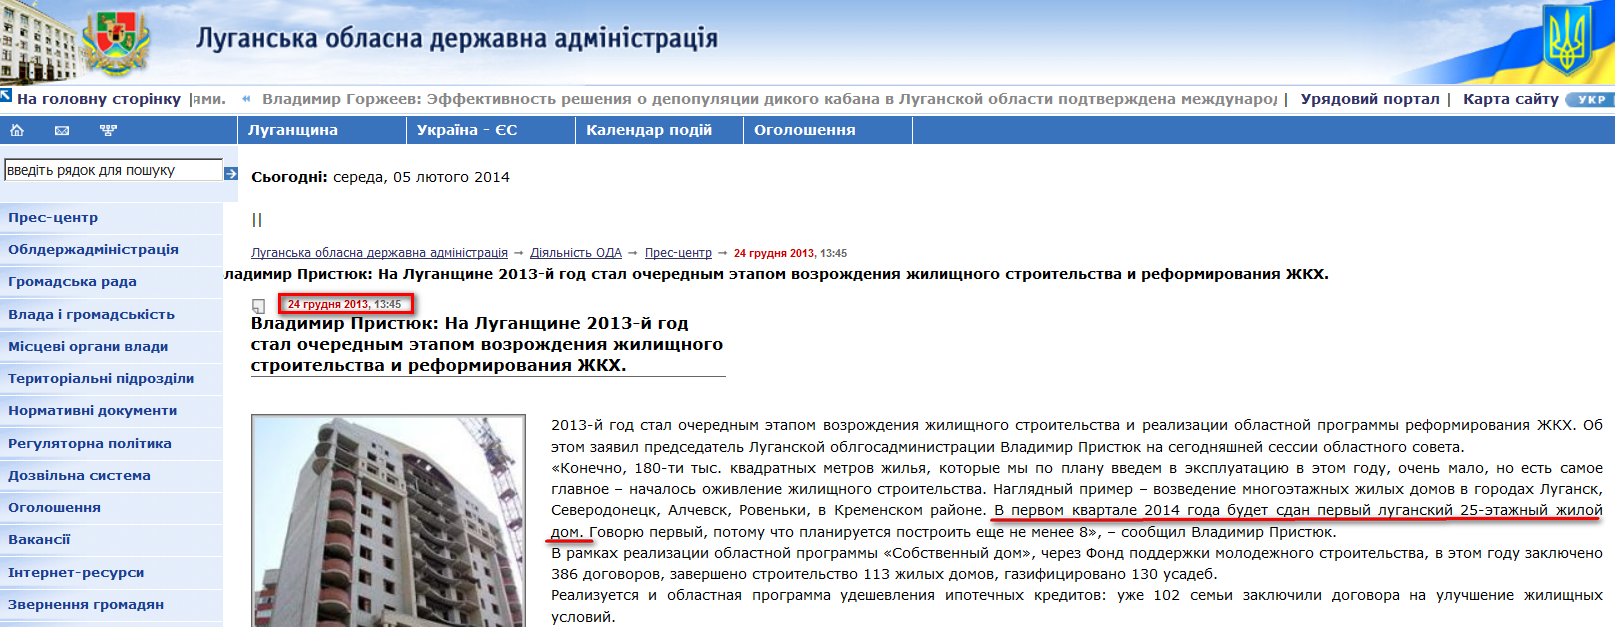 http://www.loga.gov.ua/oda/press/news/2013/12/24/news_62110.html